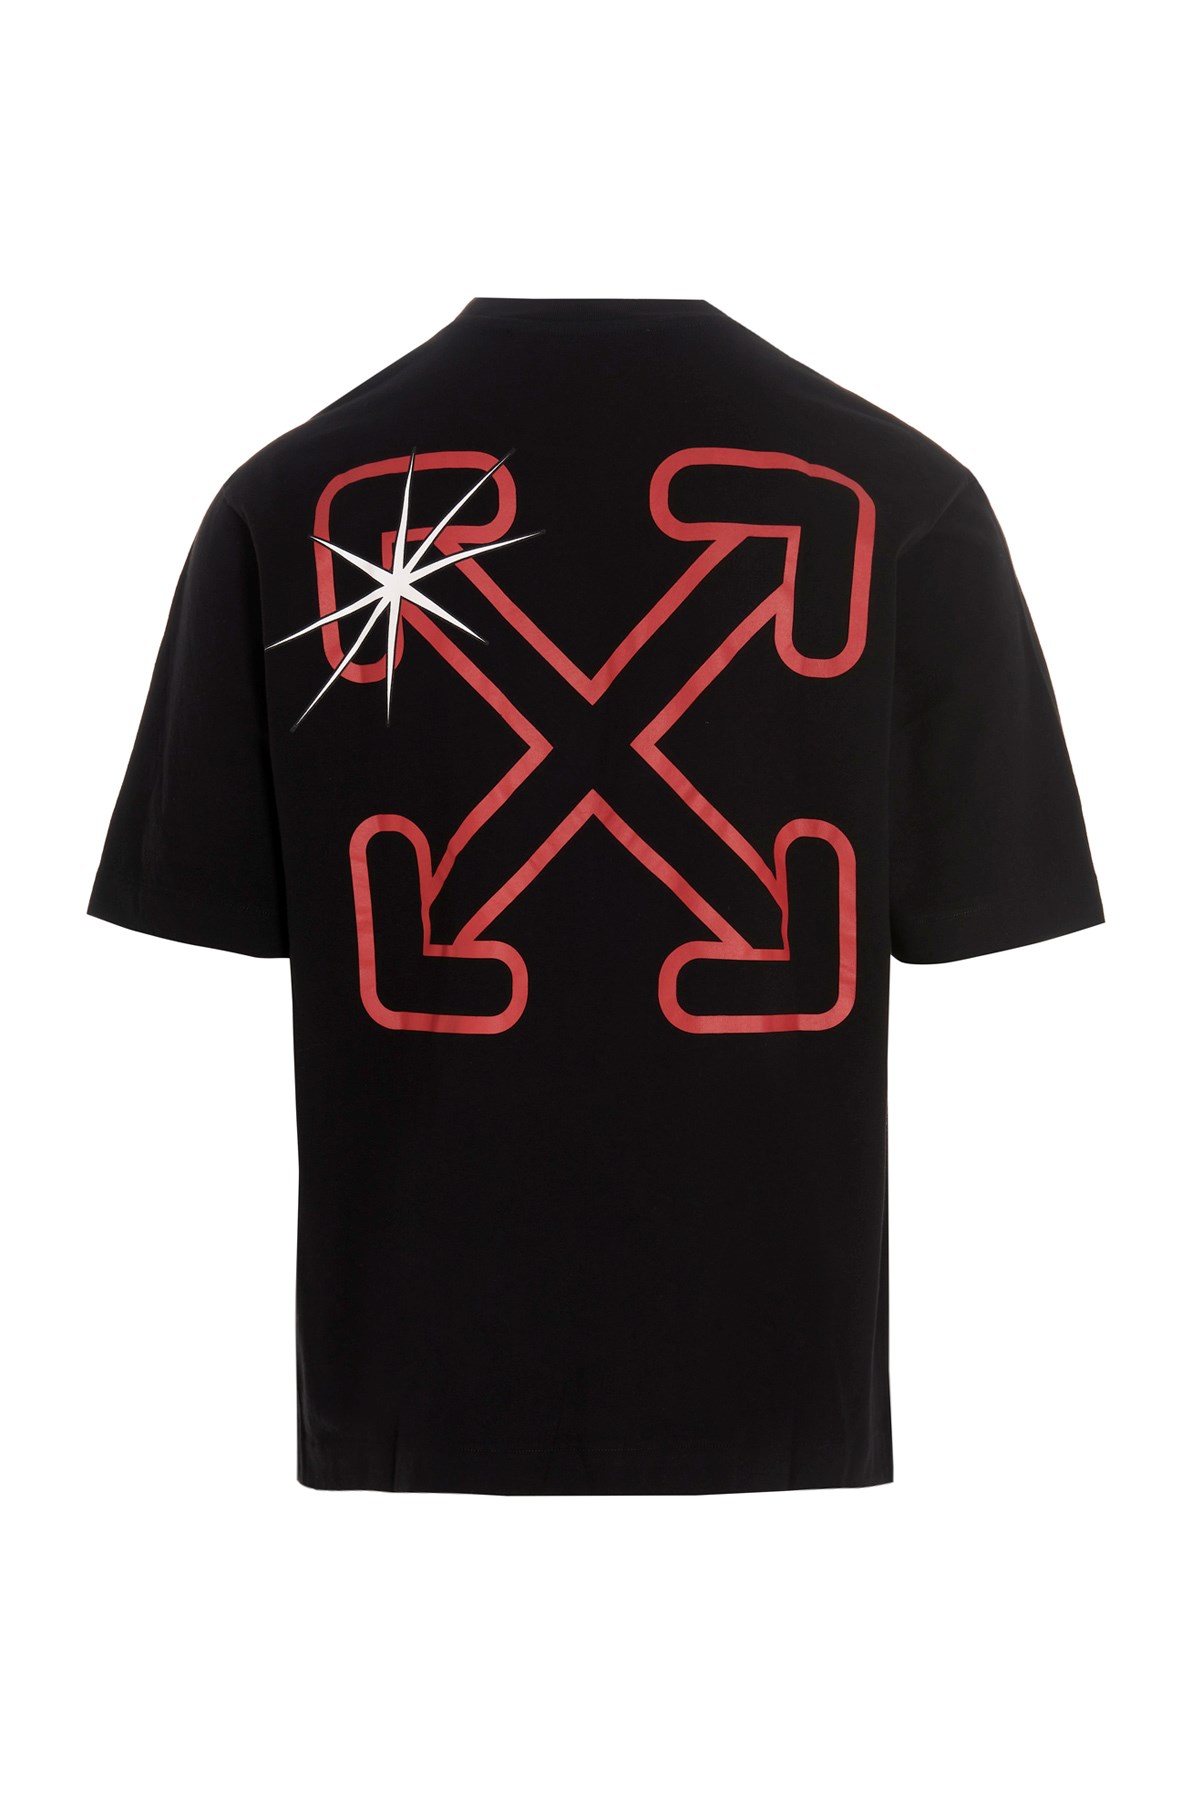 OFF-WHITE 'Logo Starred Arrow’ T-Shirt